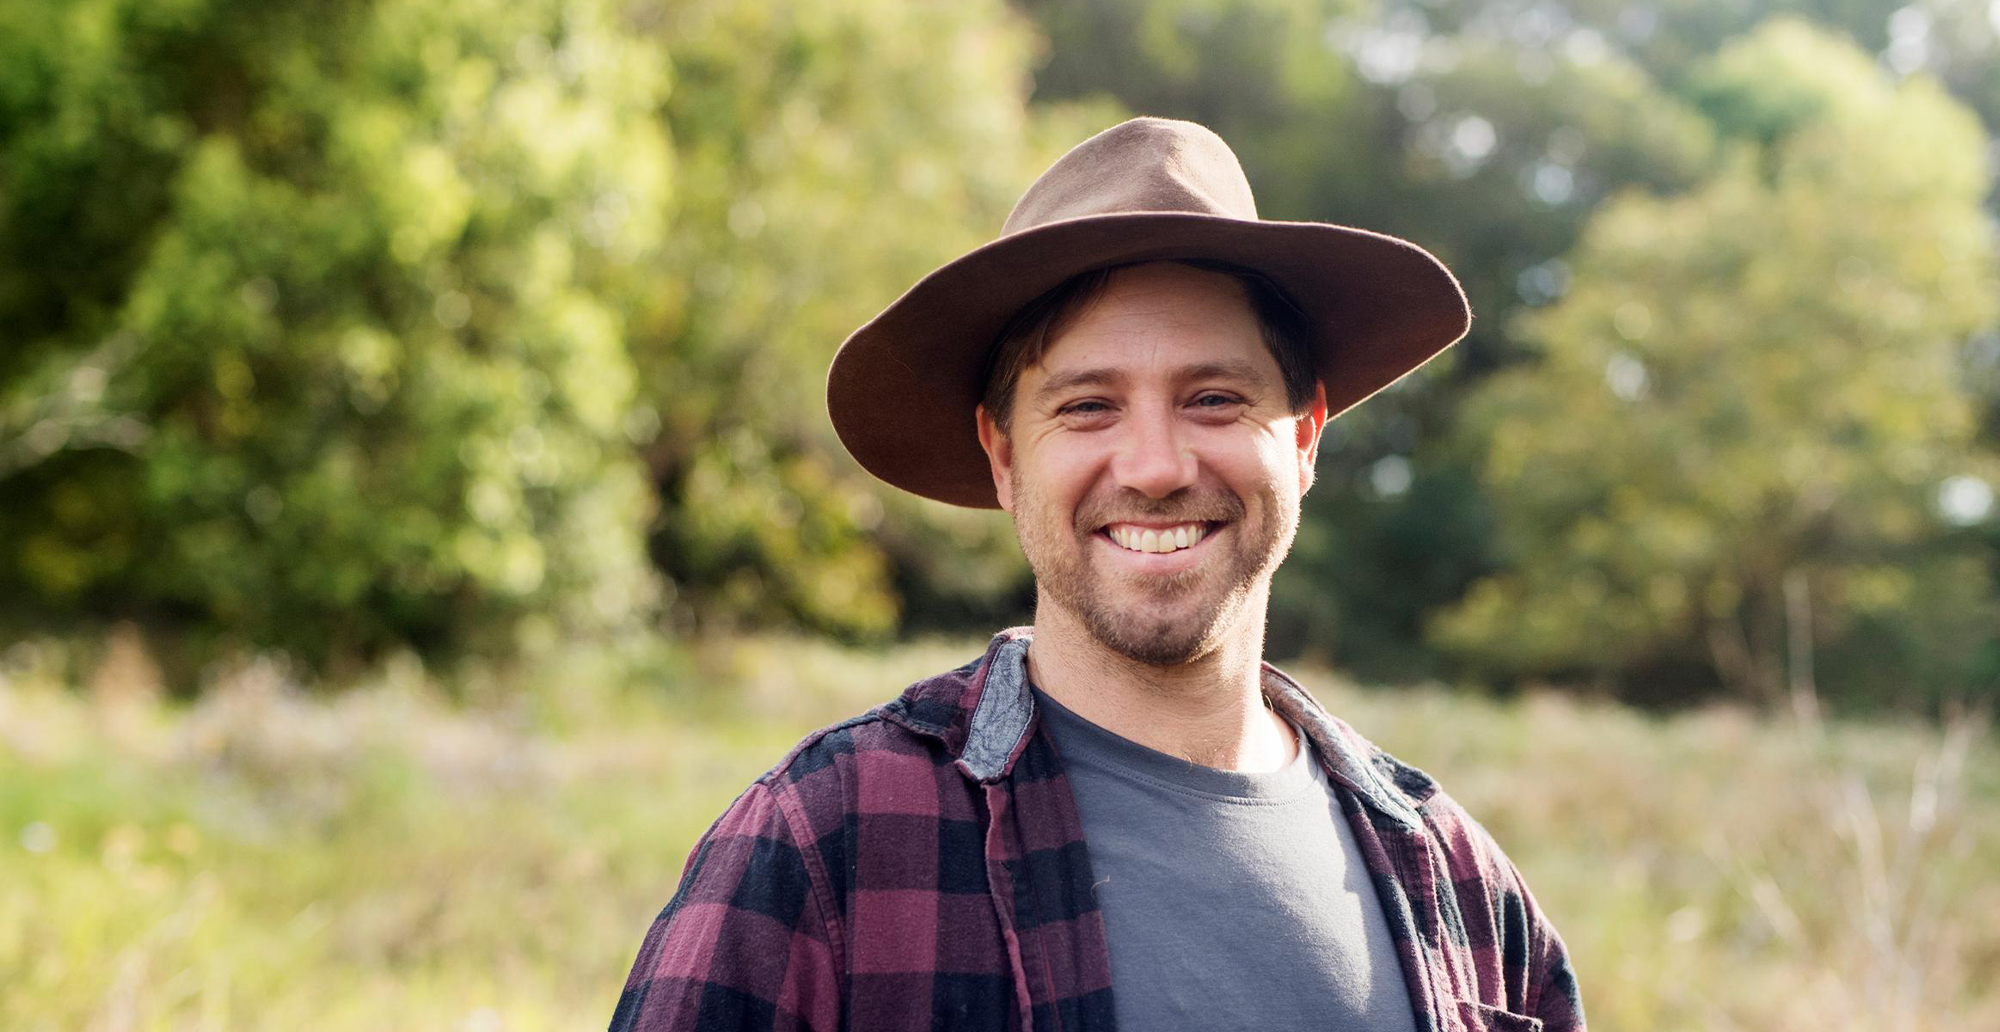 Man wearing hat smiling in a paddock